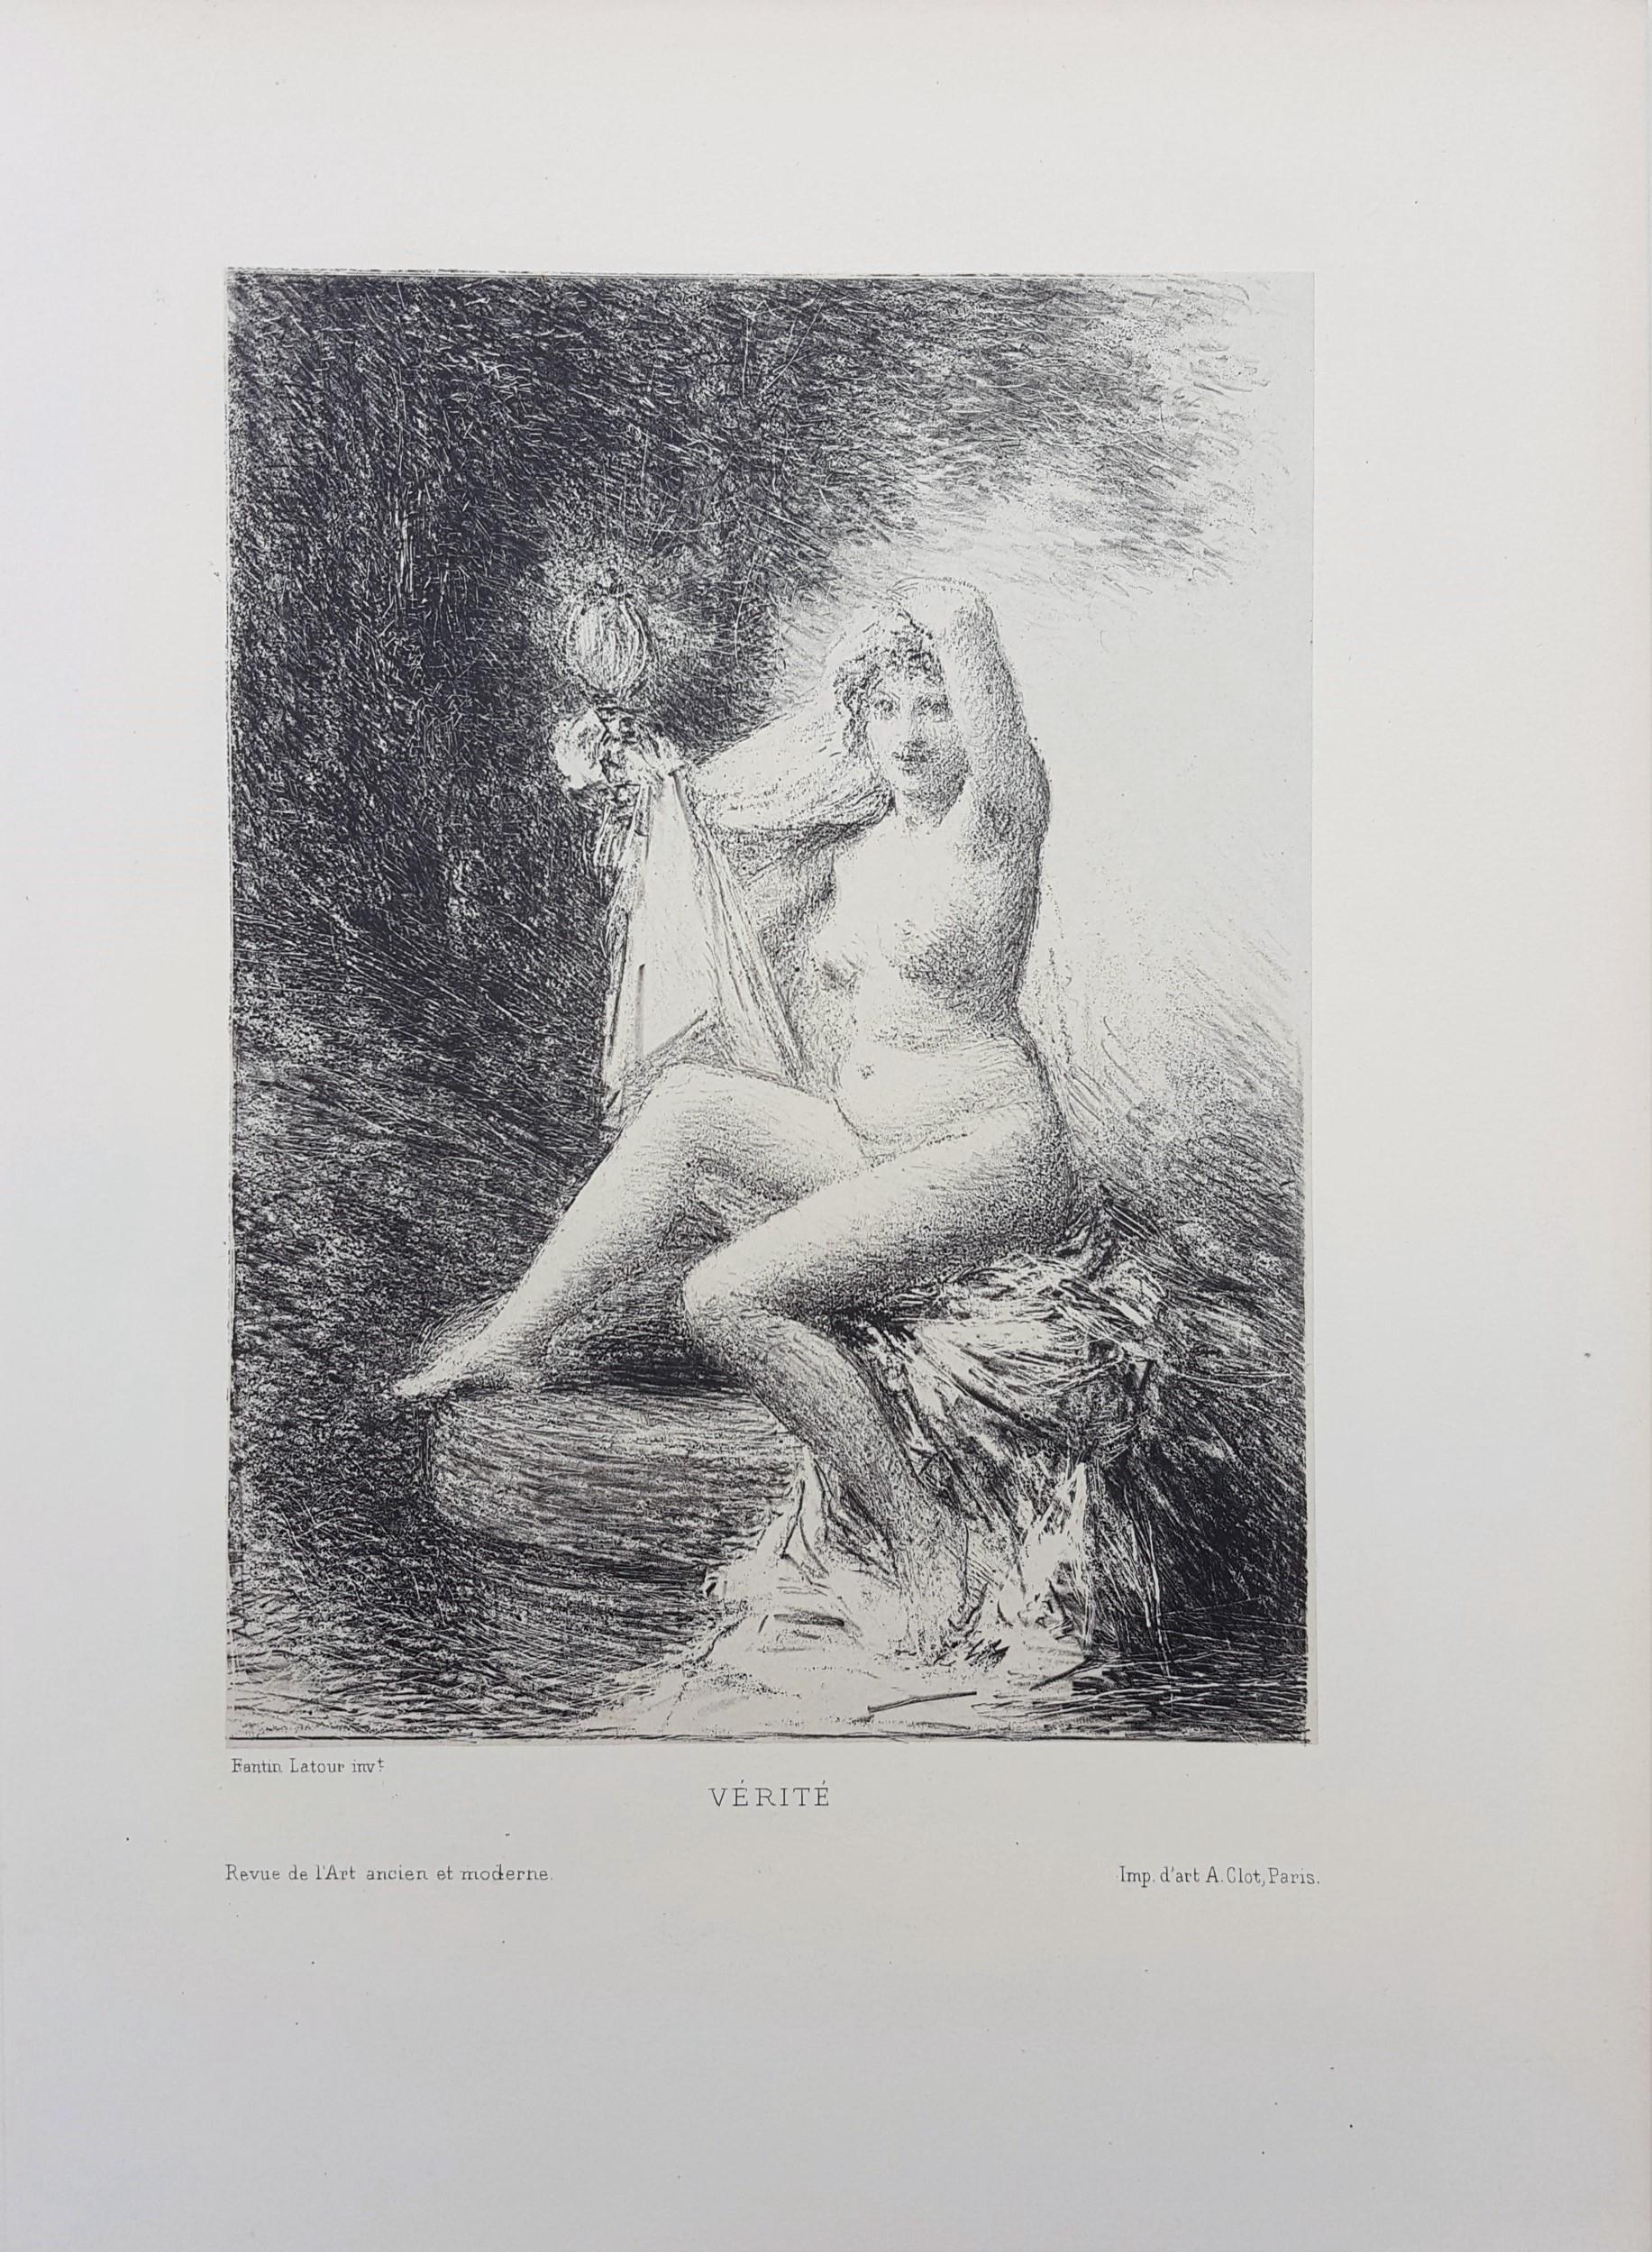 Vérité (Truth) /// French Modern Impressionist Art Lithograph Nude Figurative  - Print by Henri Fantin-Latour